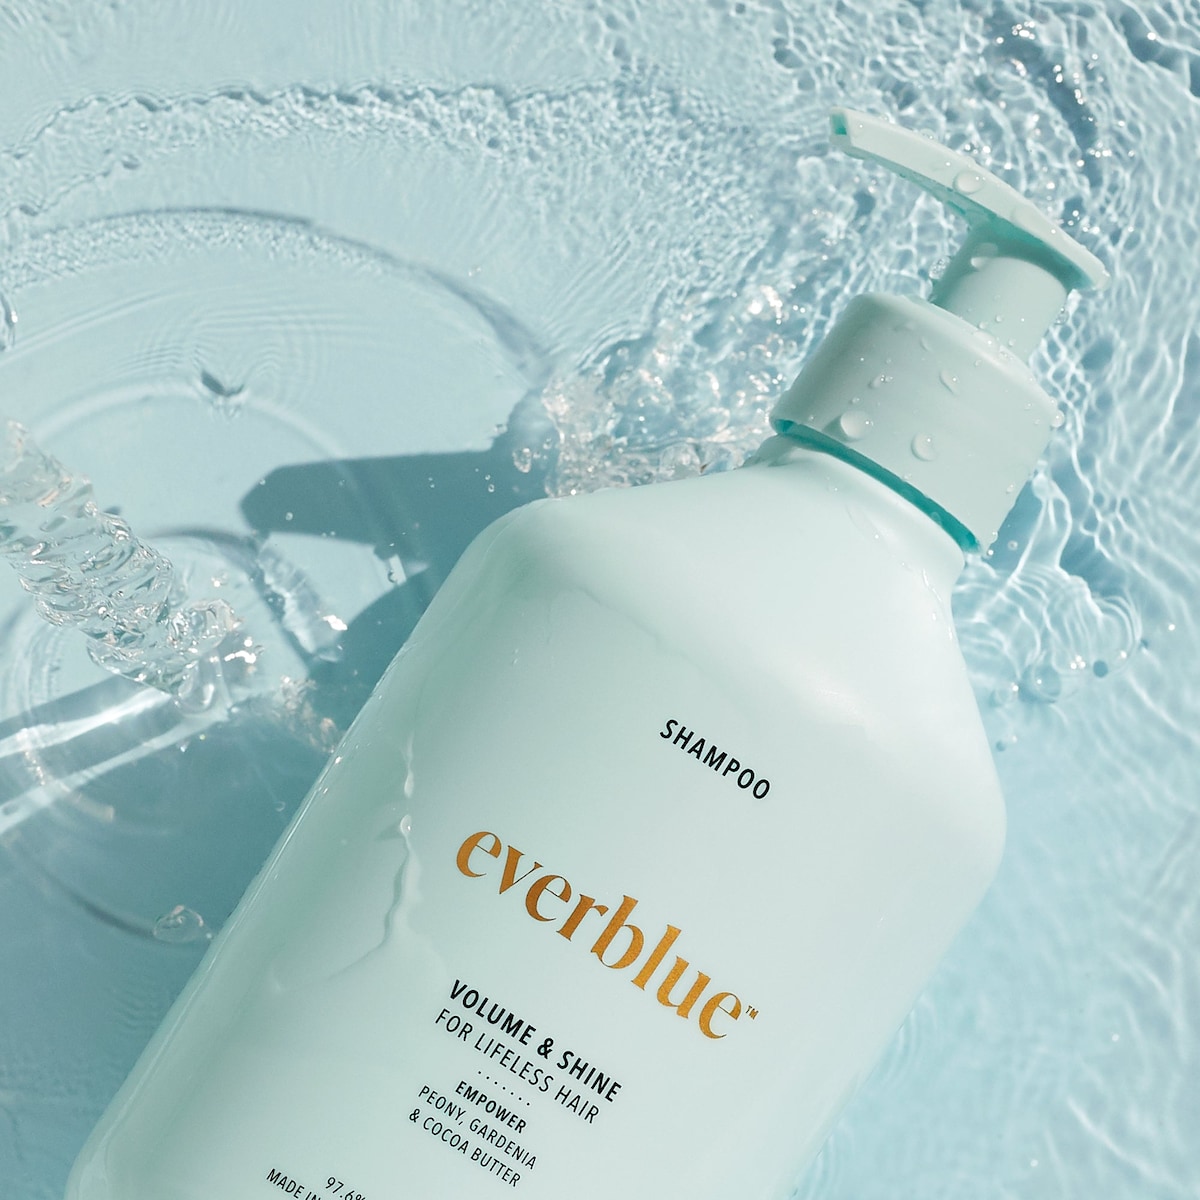 Everblue Shampoo Empower Volume and Shine 400ml